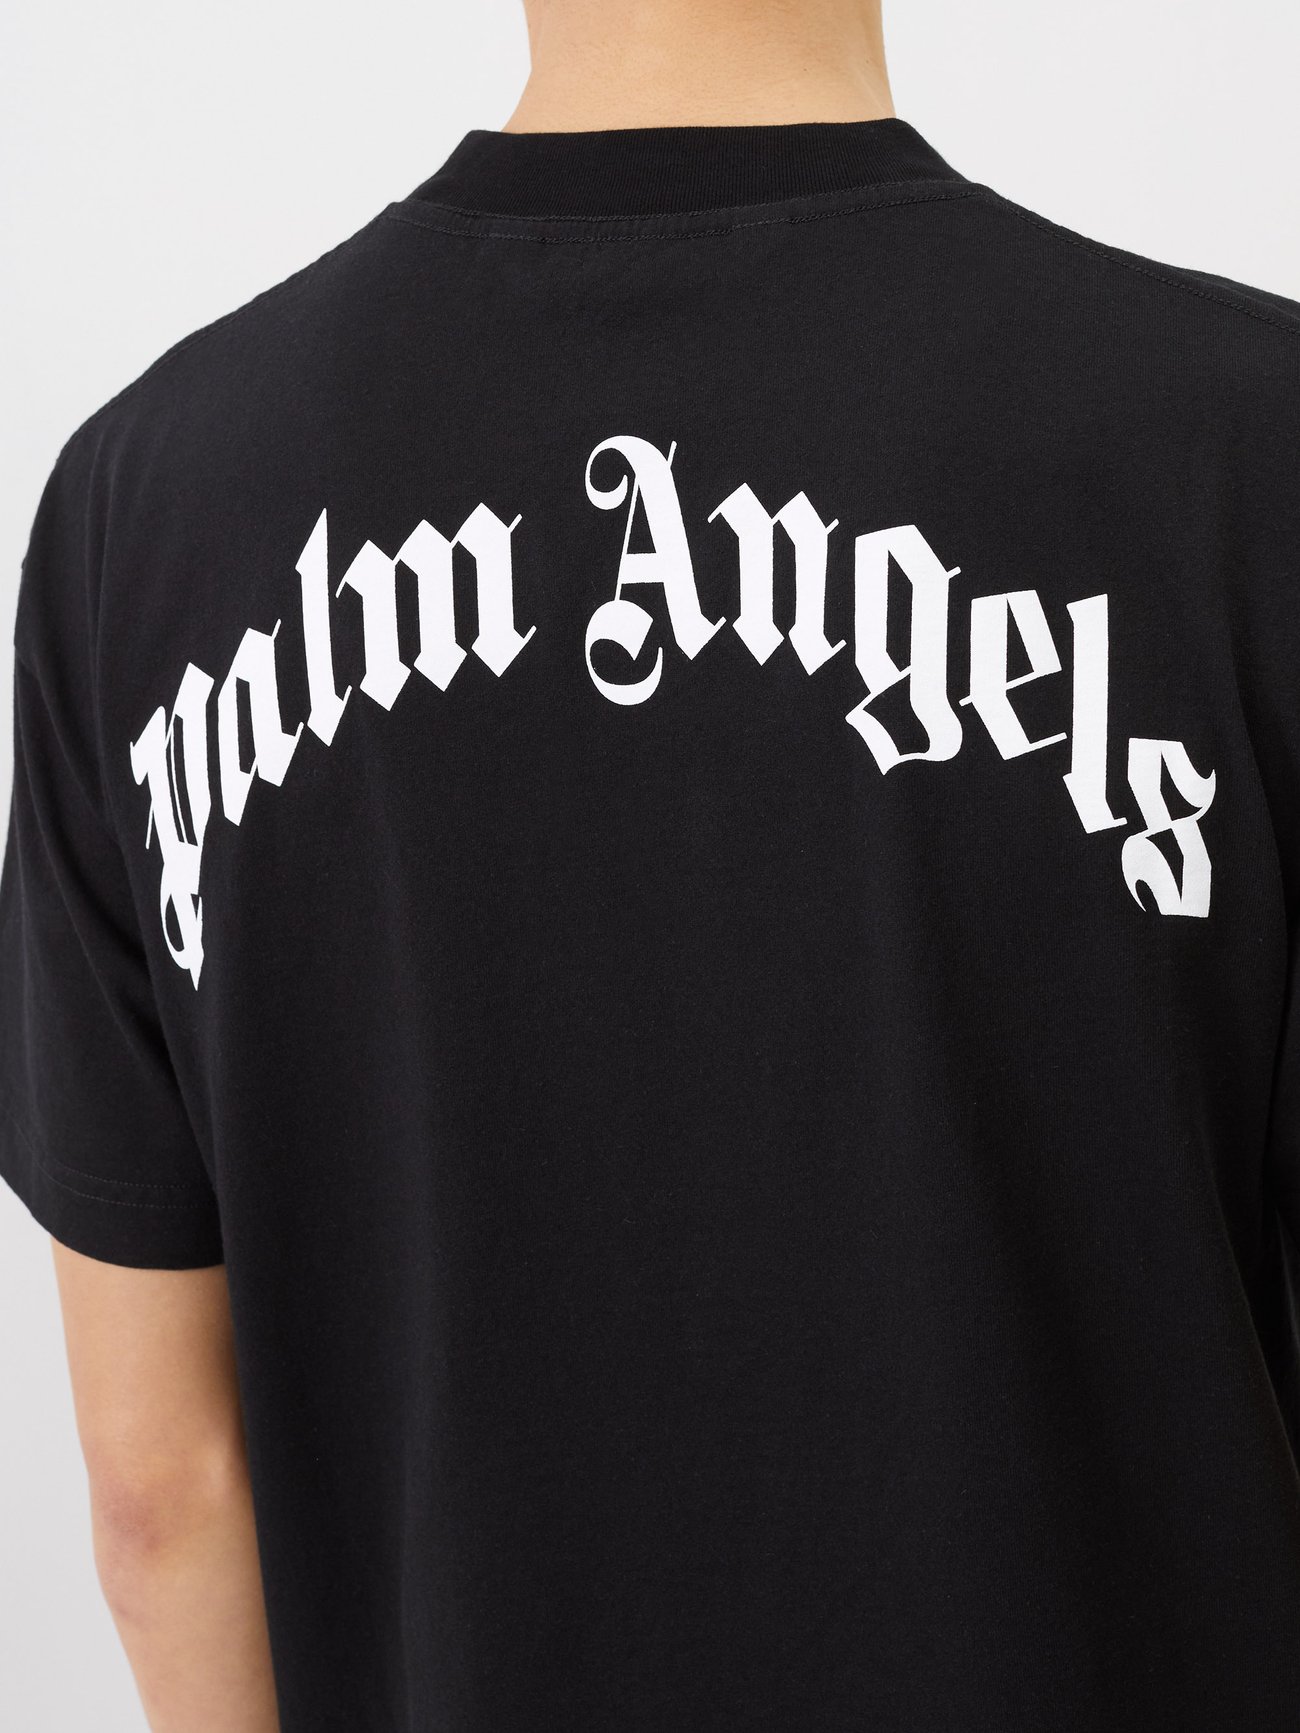 Palm Angels T-Shirt Black / XL